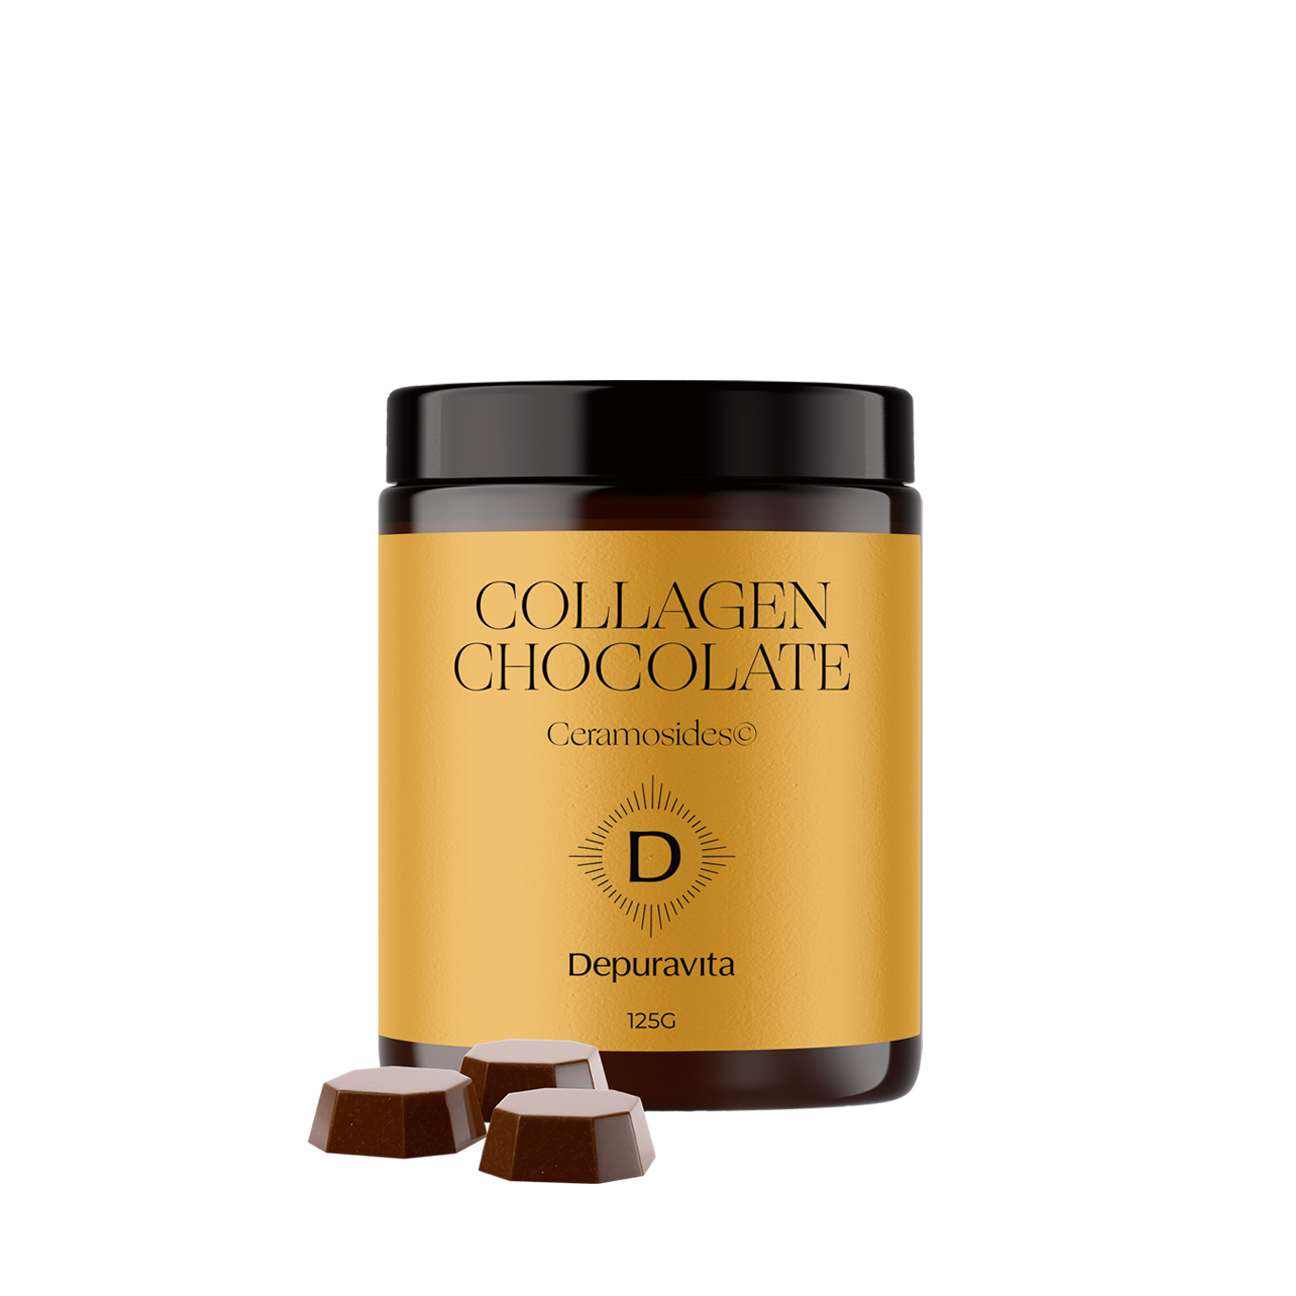 Collagen Chocolate - 100% raw Caco